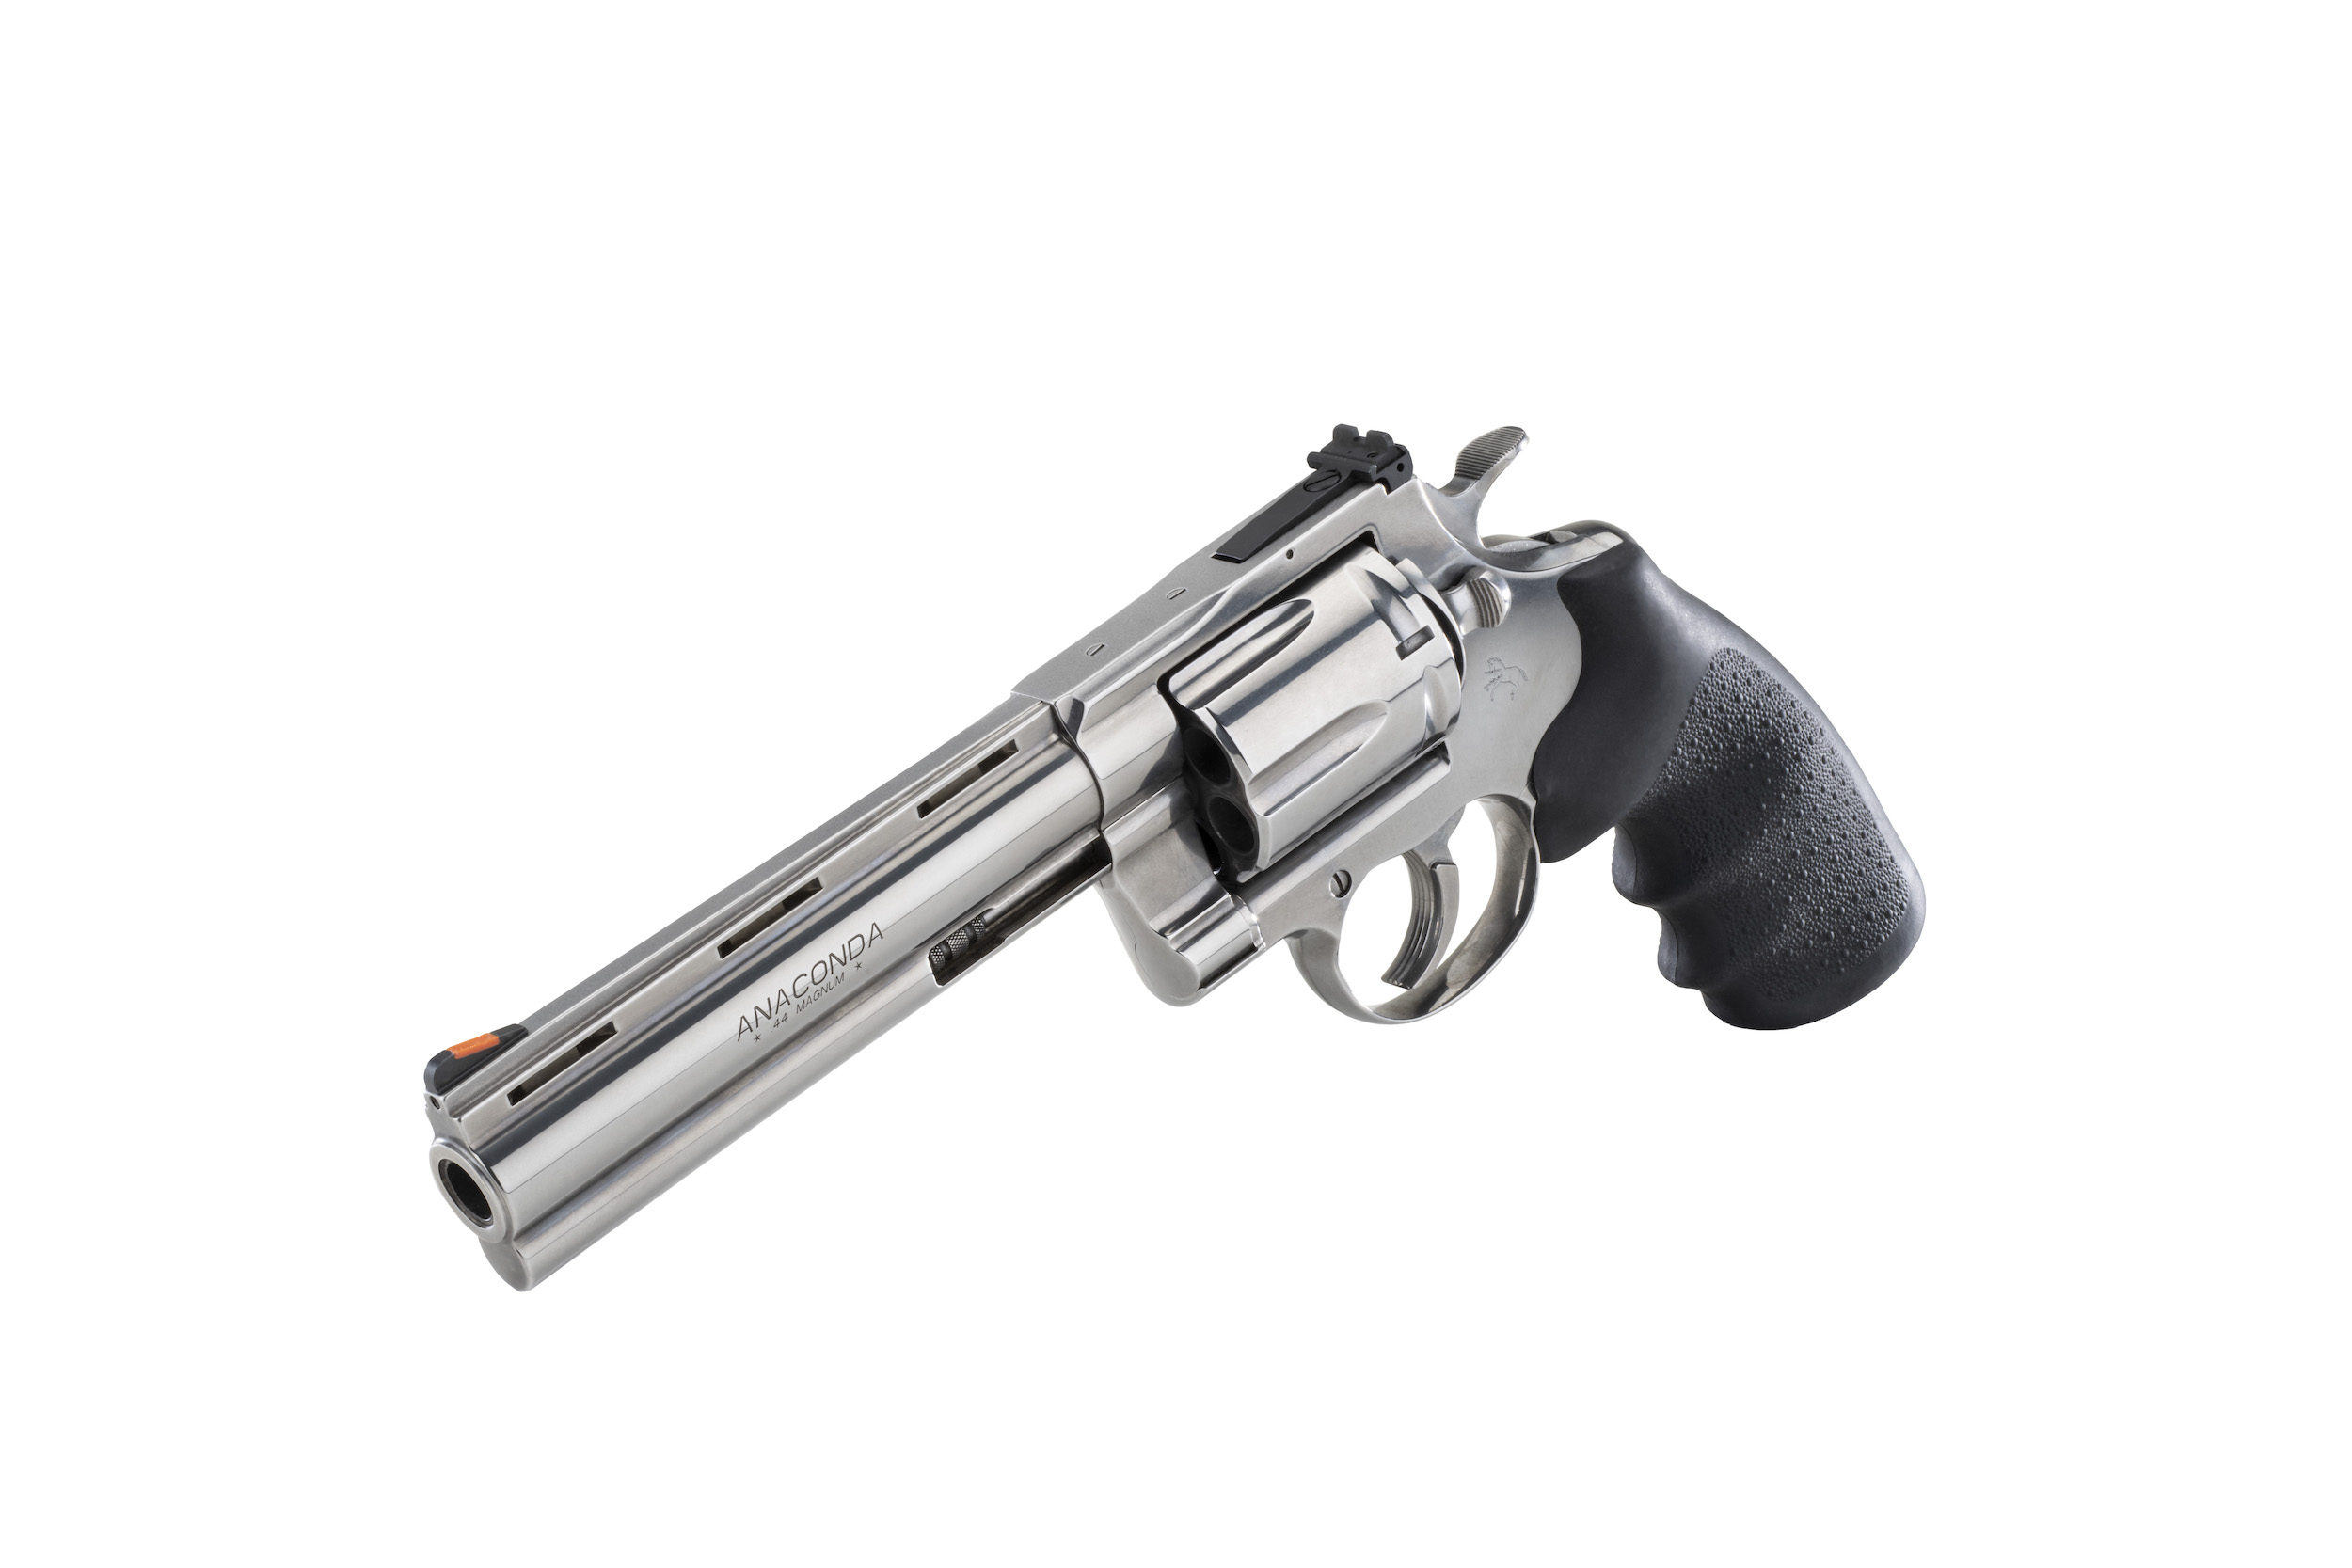 Colt Anaconda 44 Magnum Revolver 6 inch barrel